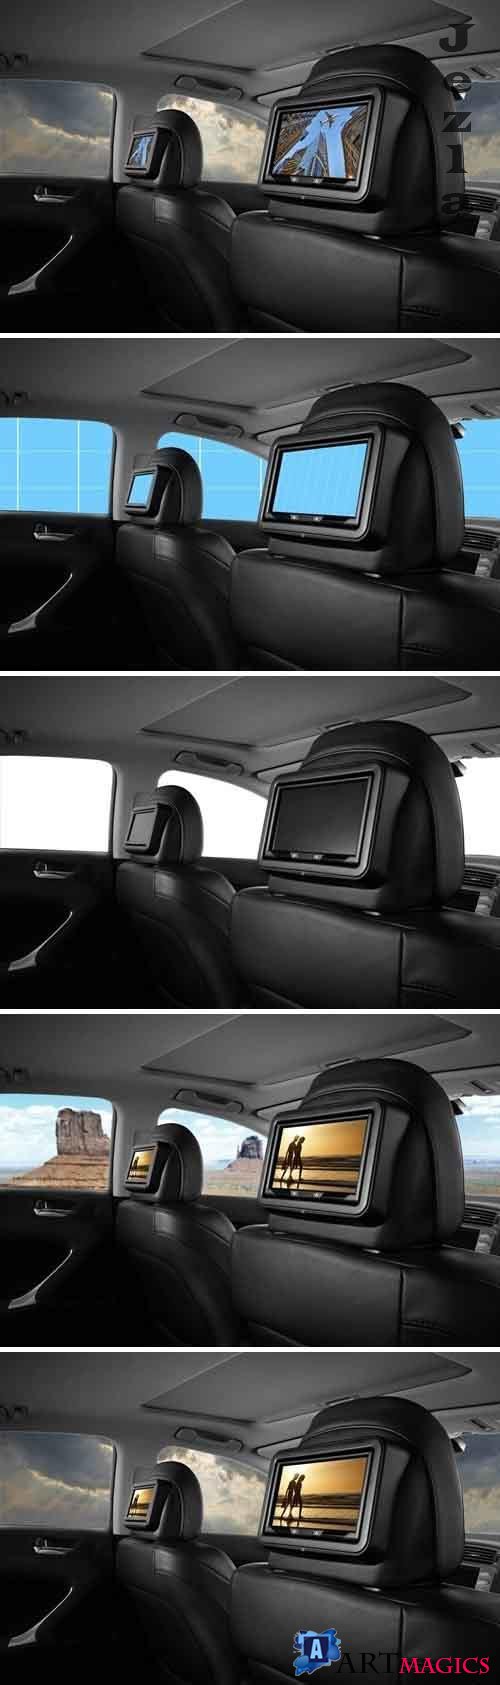 Leather interior-Car-Mockup - JVSM87A